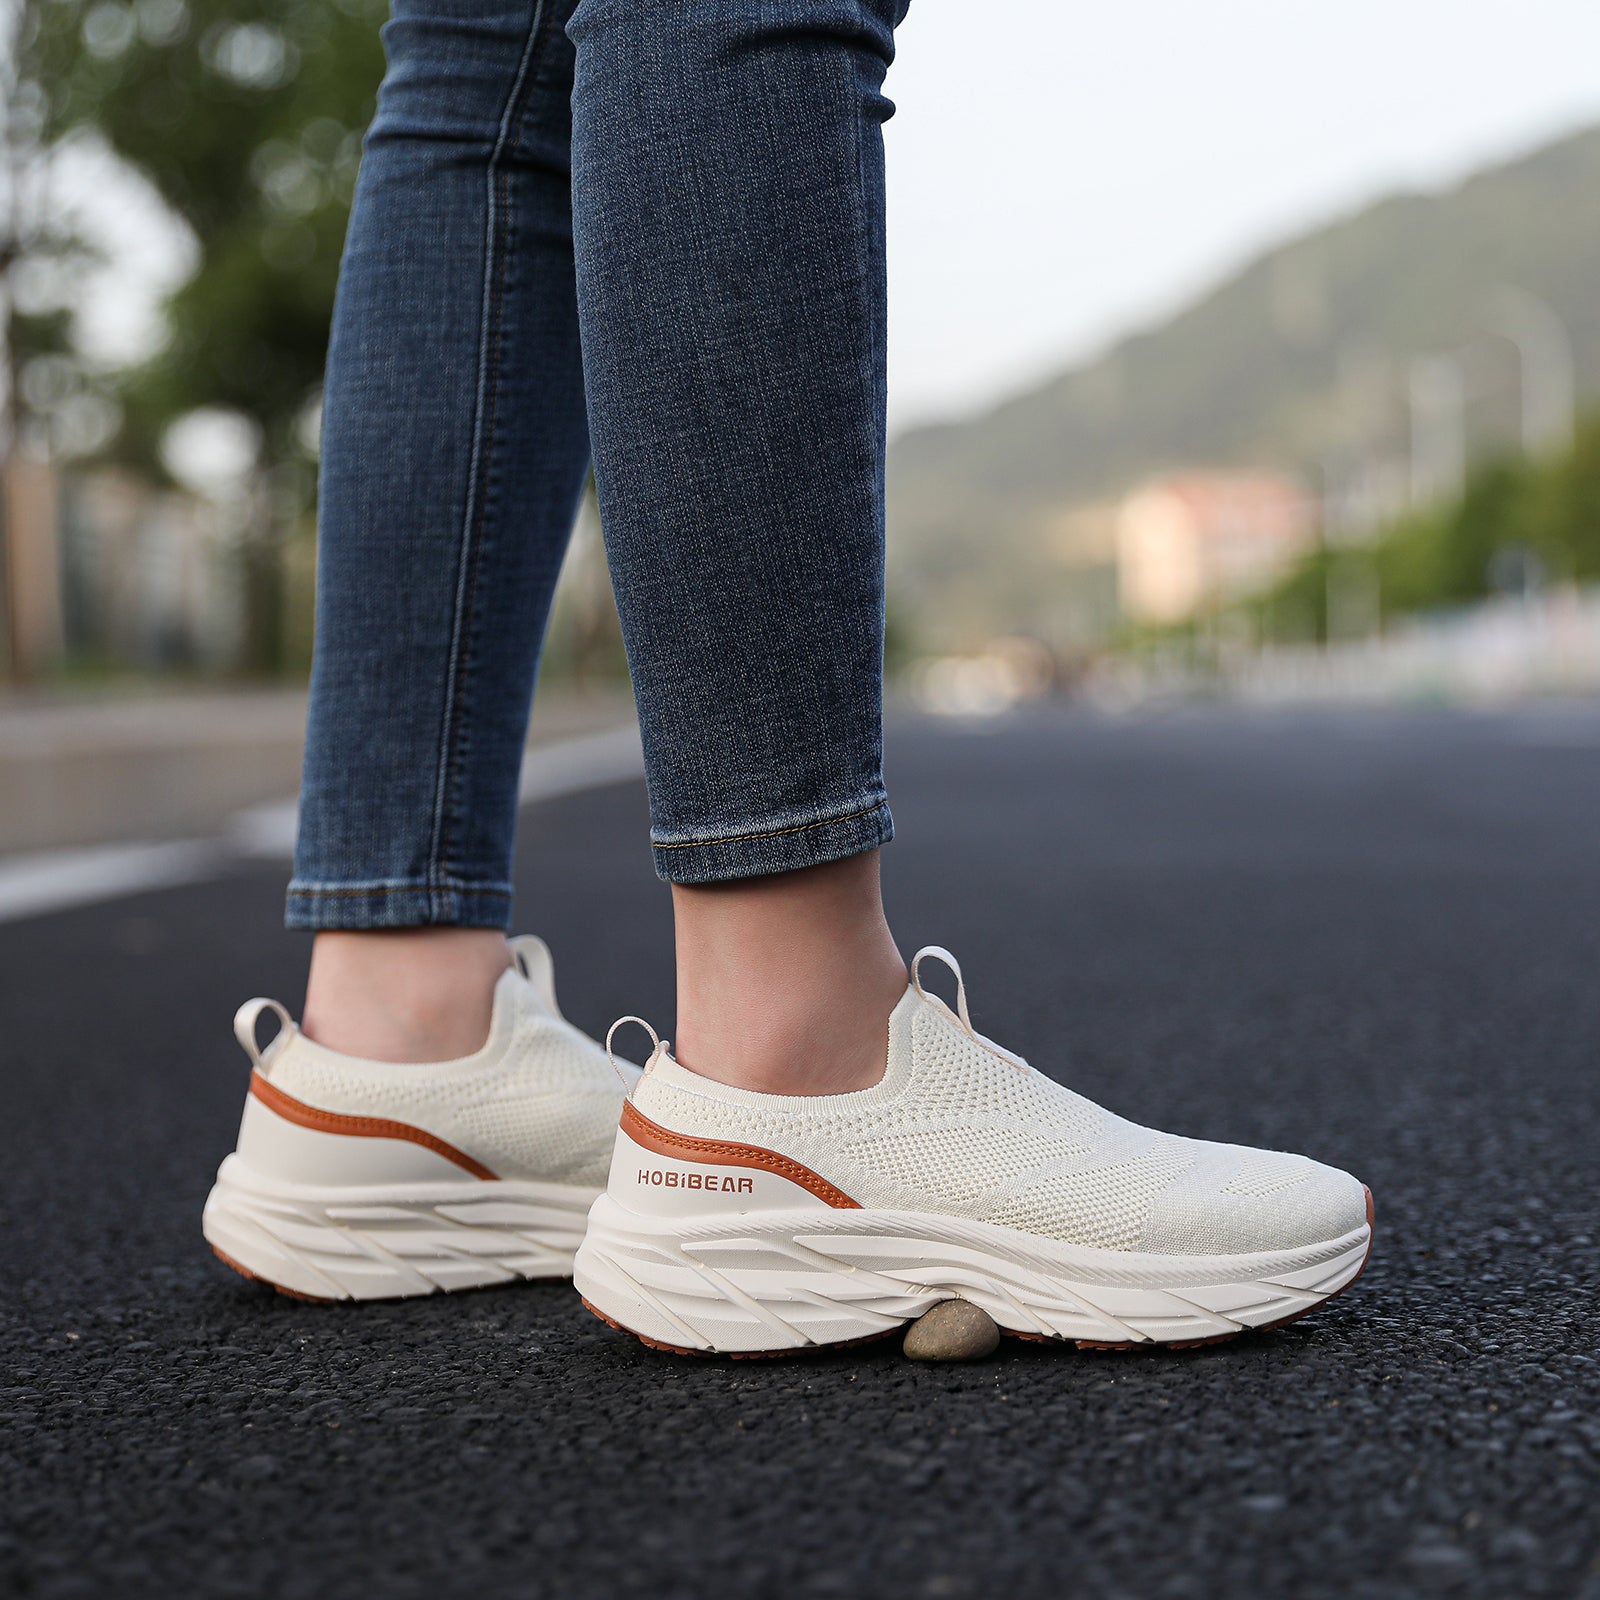 HOBIBEAR Slip-on-Damen-Walking-Sneaker, leichte Tennisschuhe mit Fußgewölbeunterstützung